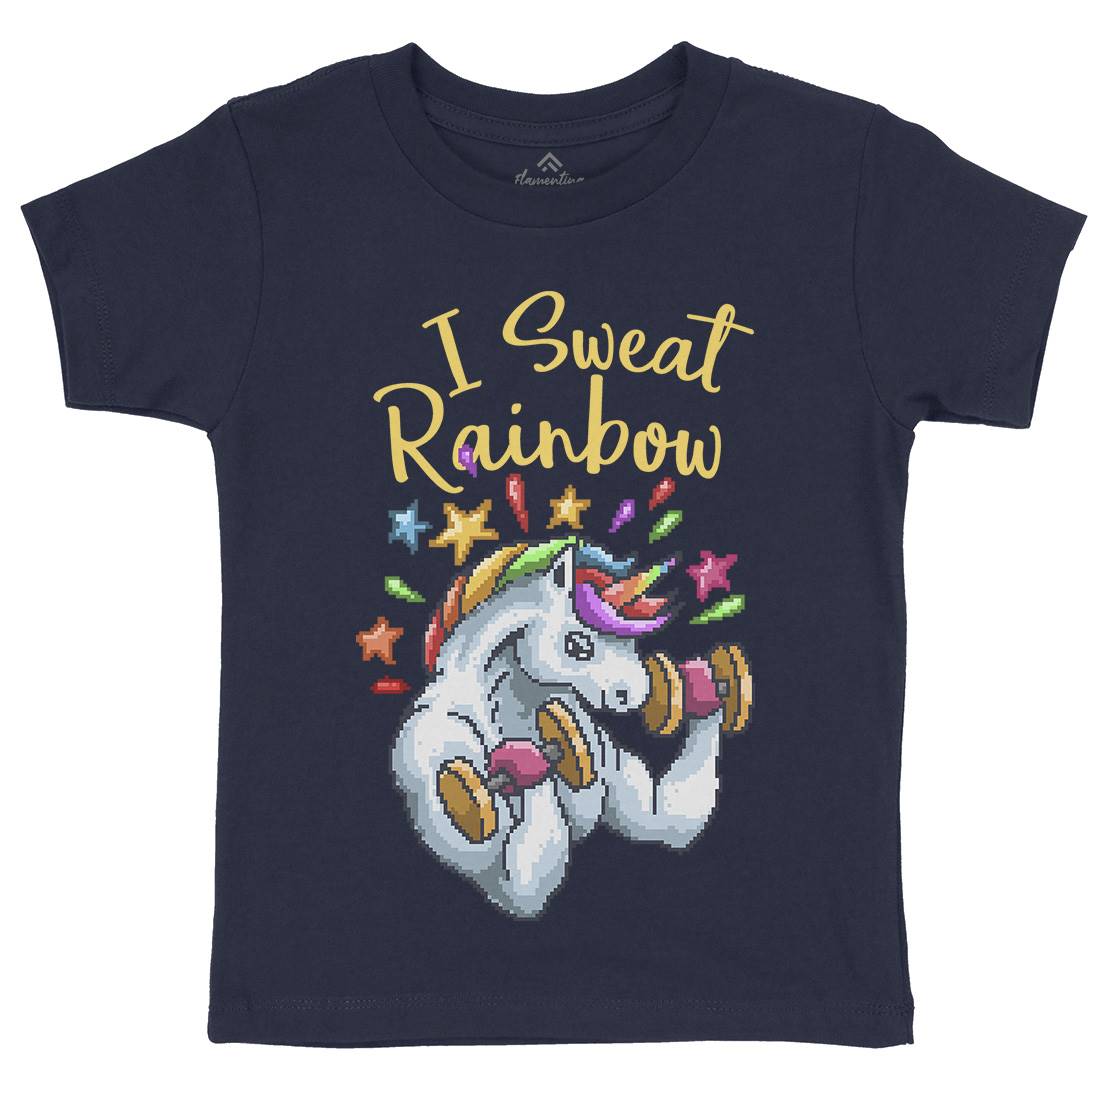 I Sweat Rainbow Kids Crew Neck T-Shirt Retro B916